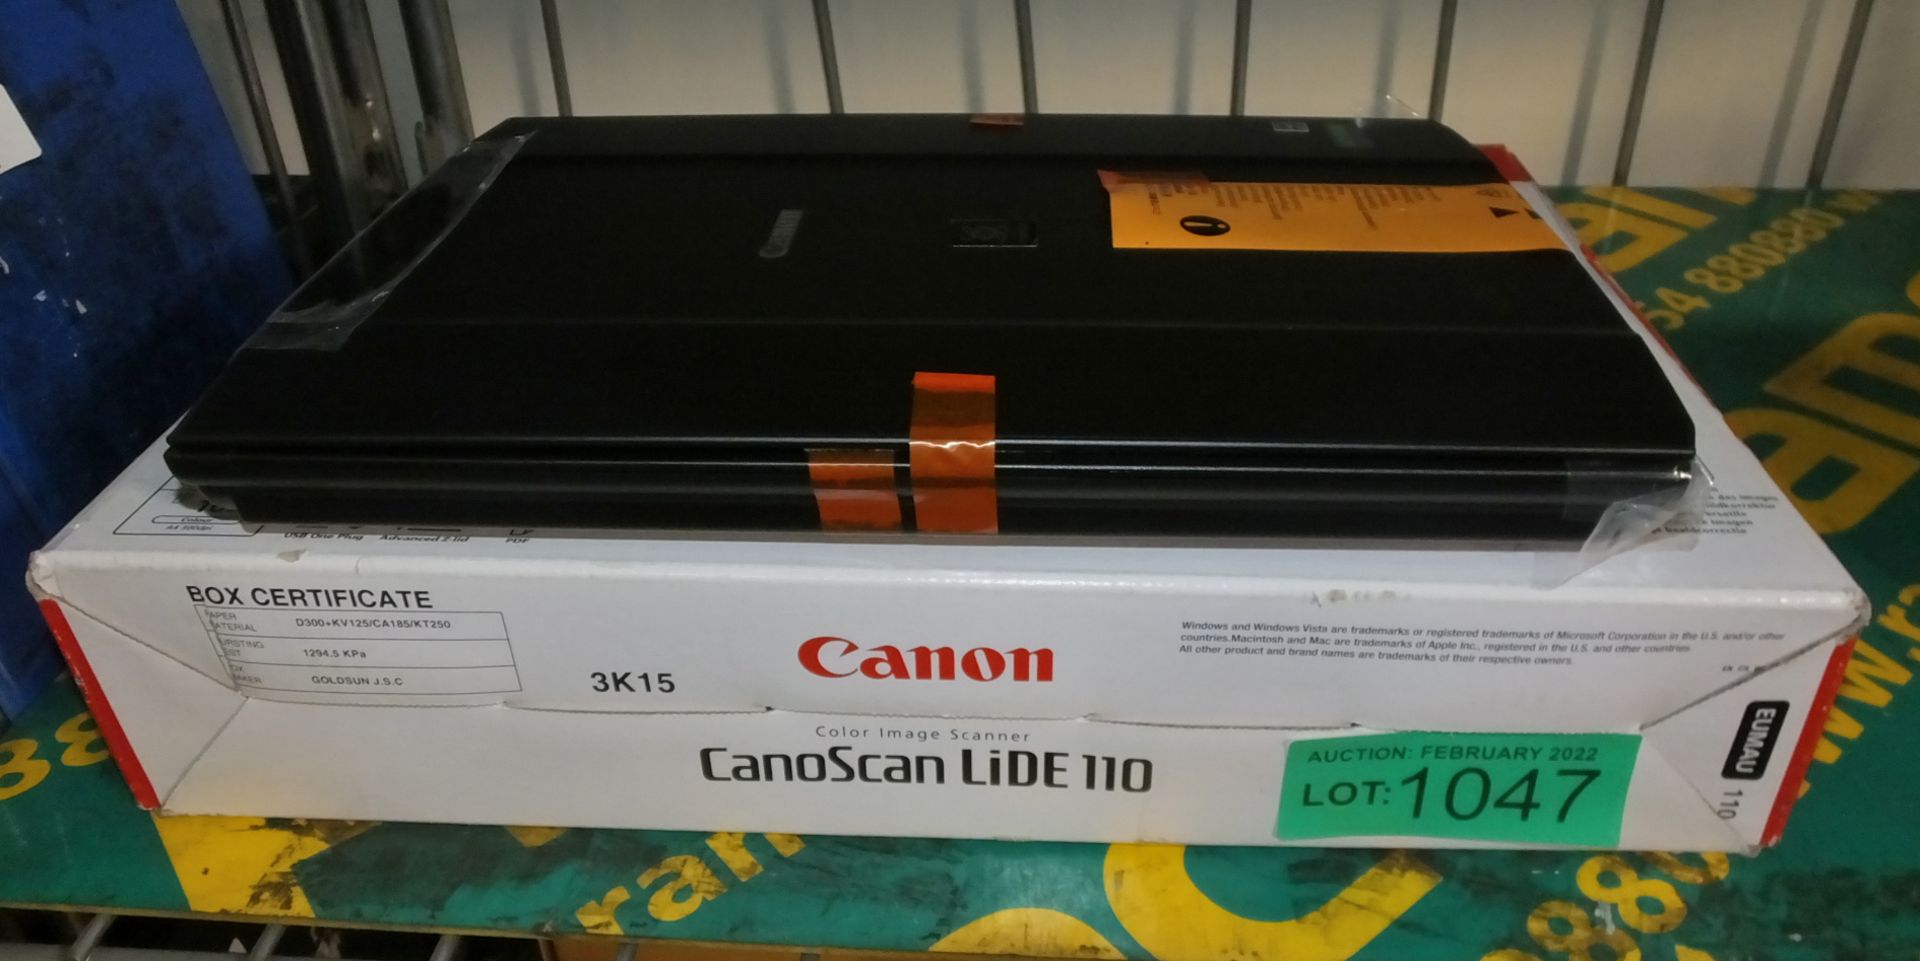 Canon Canoscan Lide110 Color Image Scanner